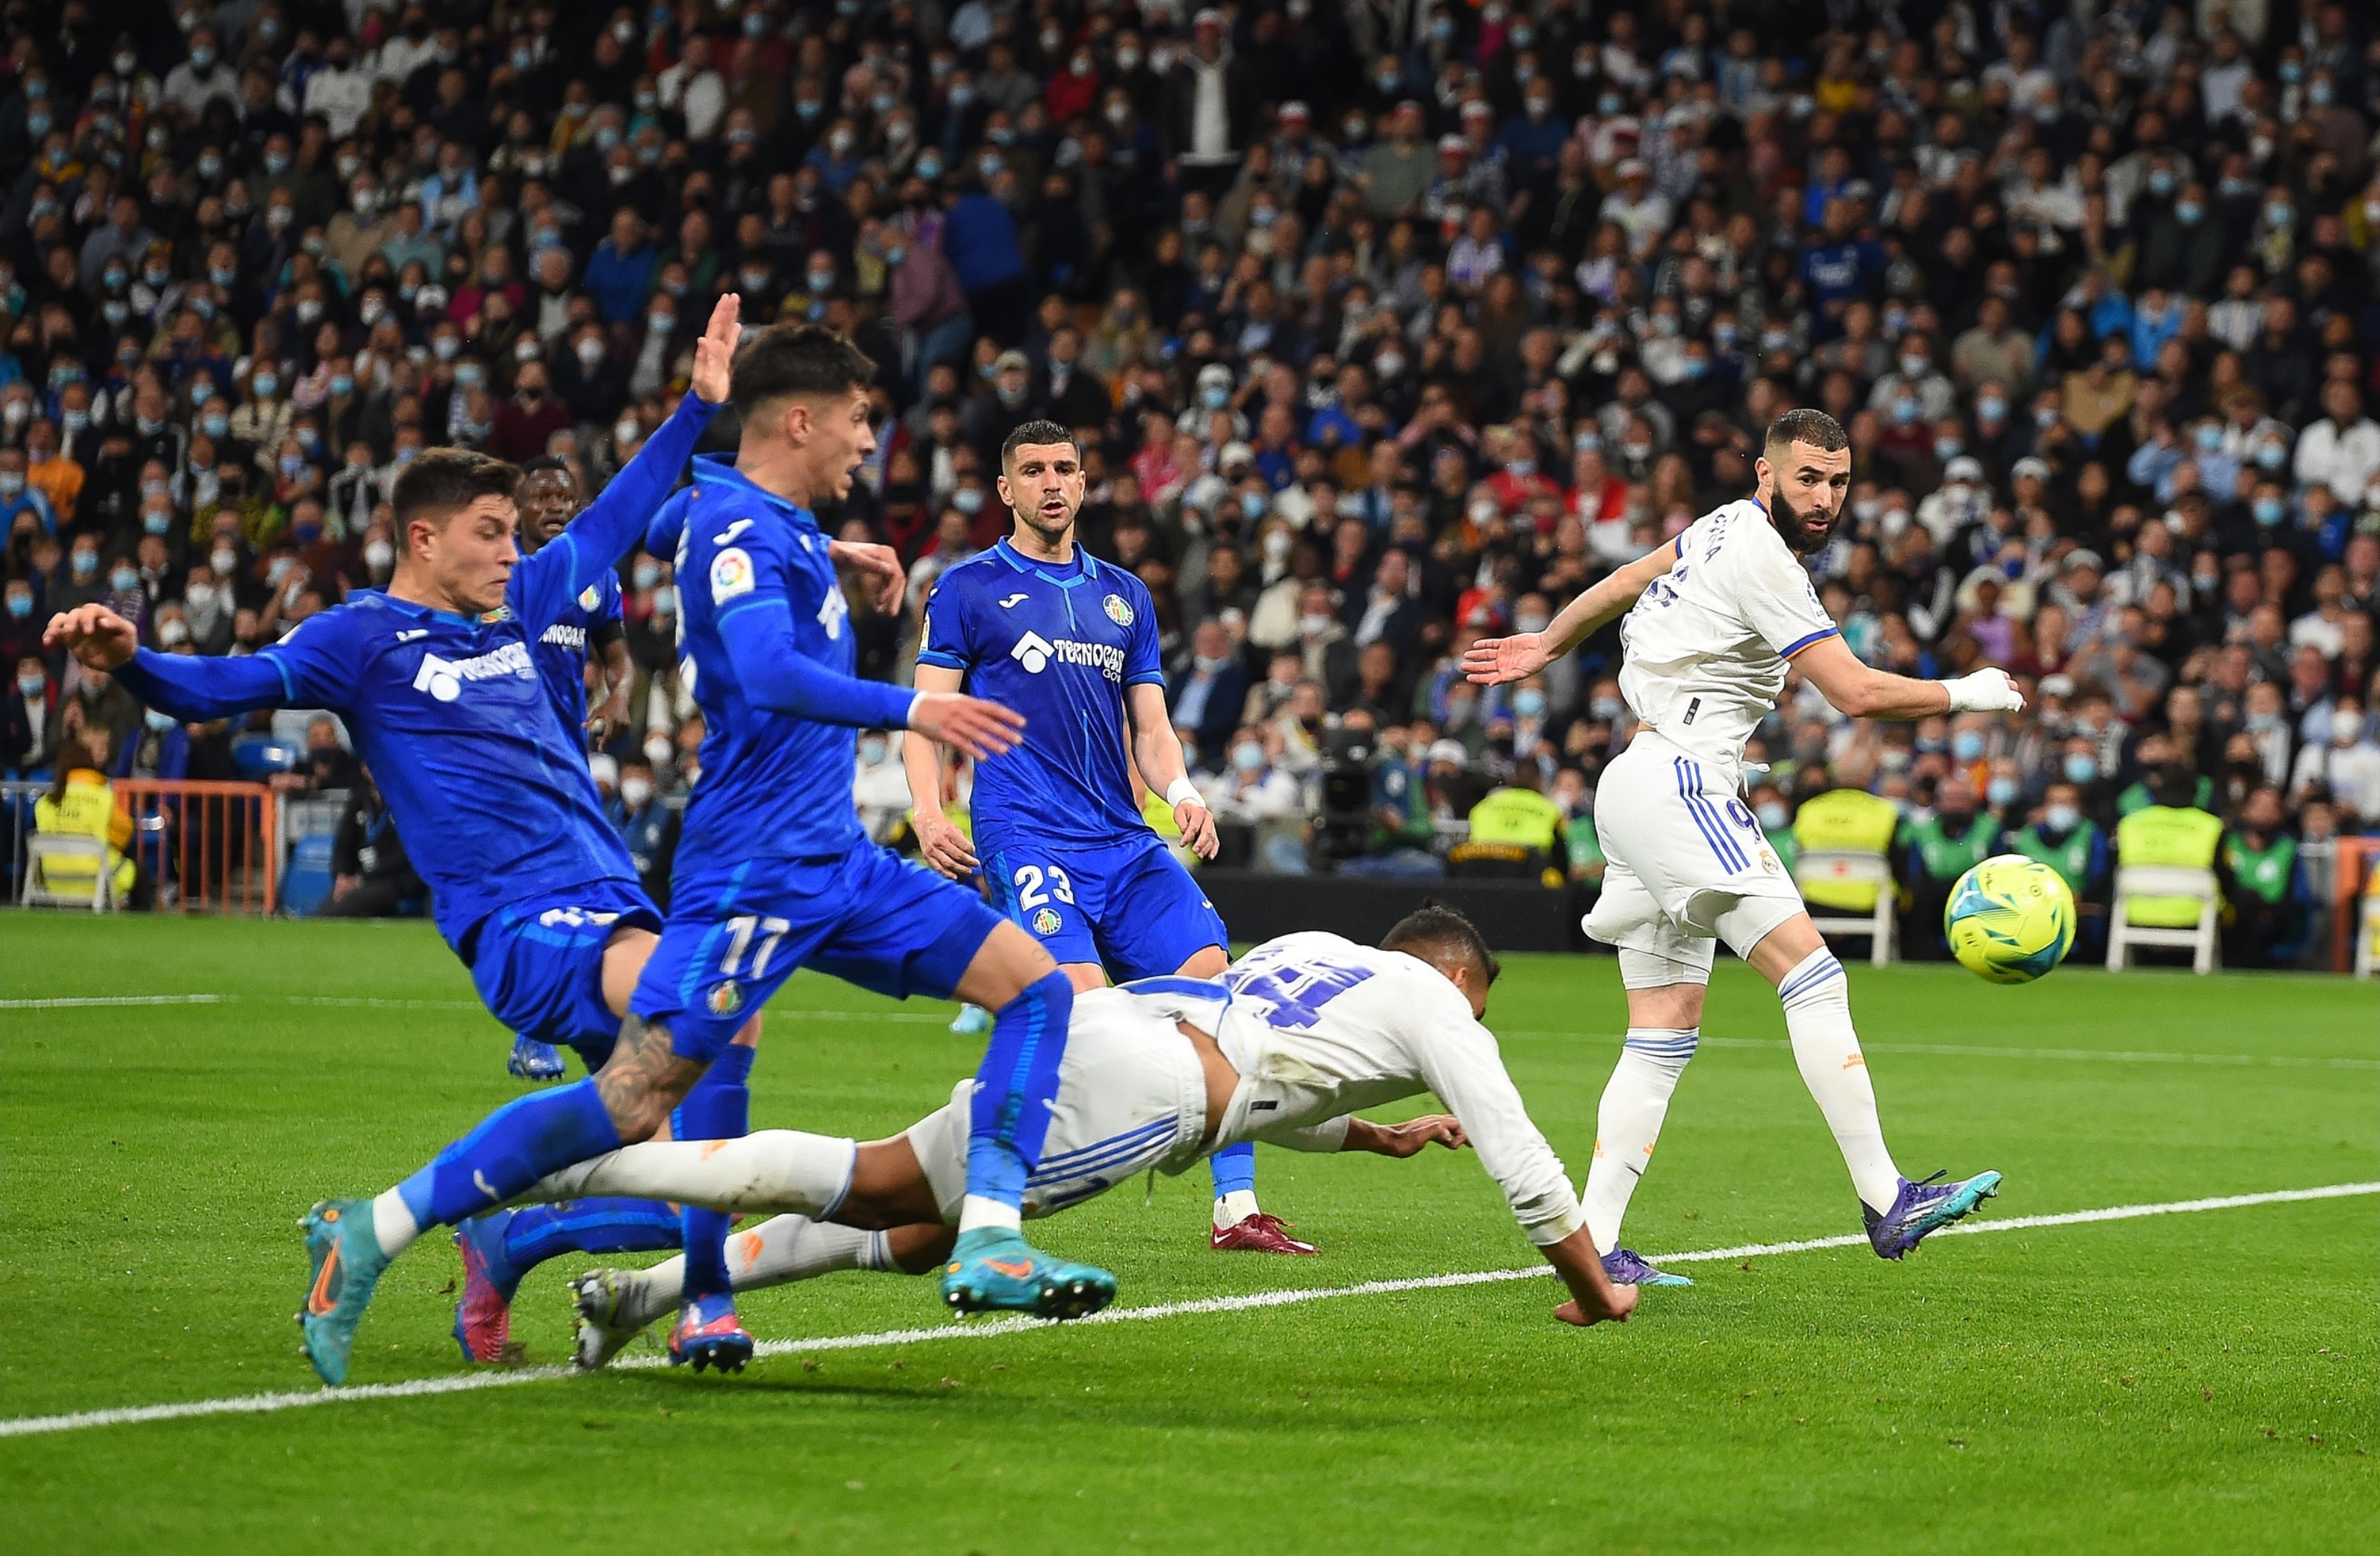 La Liga 2021/22: Goals from Casemiro and Lucas Vazquez help Real Madrid beat Getafe 2-0 at the Santiago Bernabeu, Real Madrid wins 2-0: CHECK HIGHLIGHTS